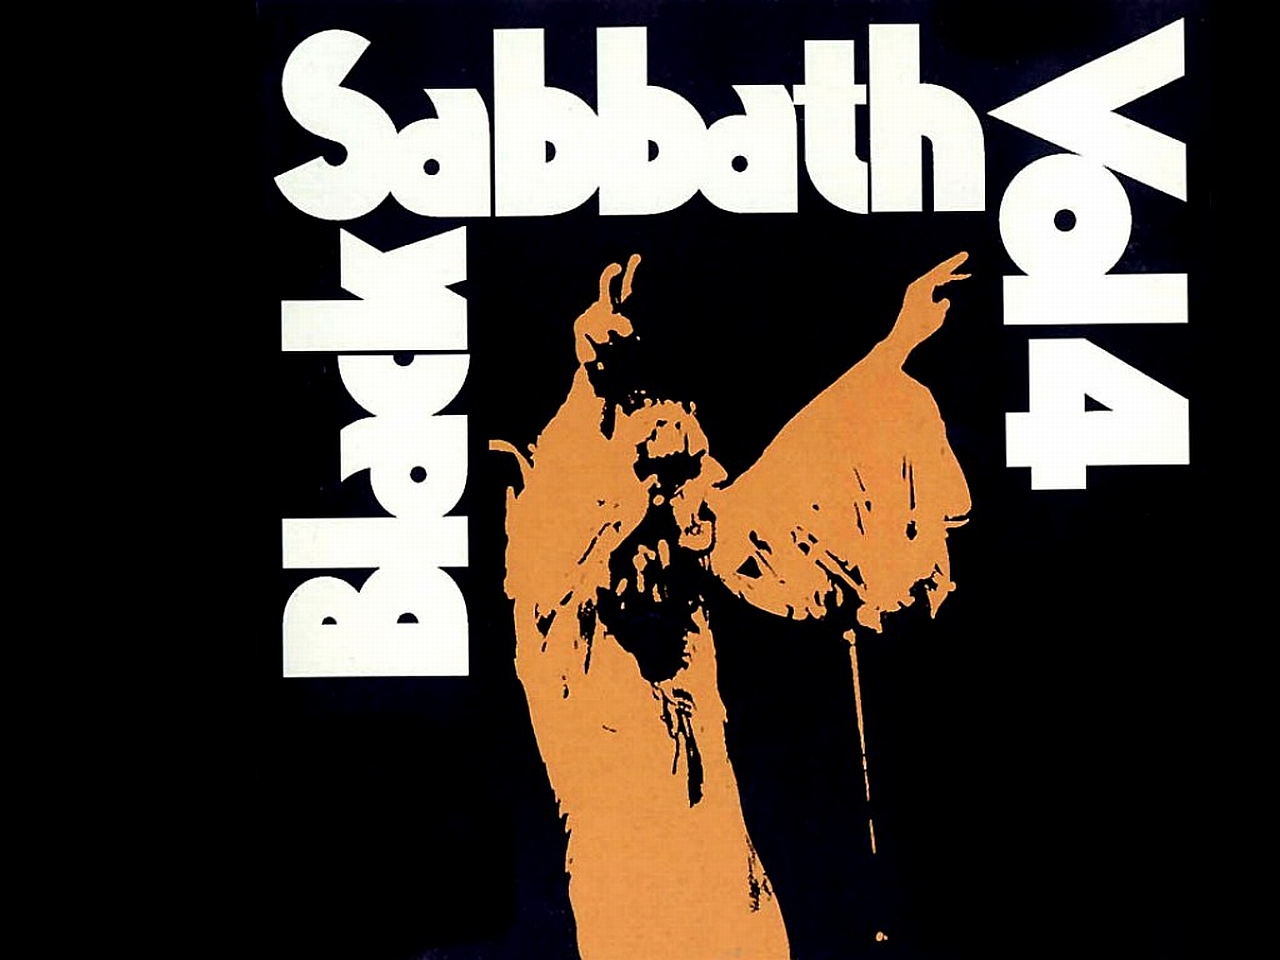 Black Sabbath Puter Wallpaper Desktop Background Id